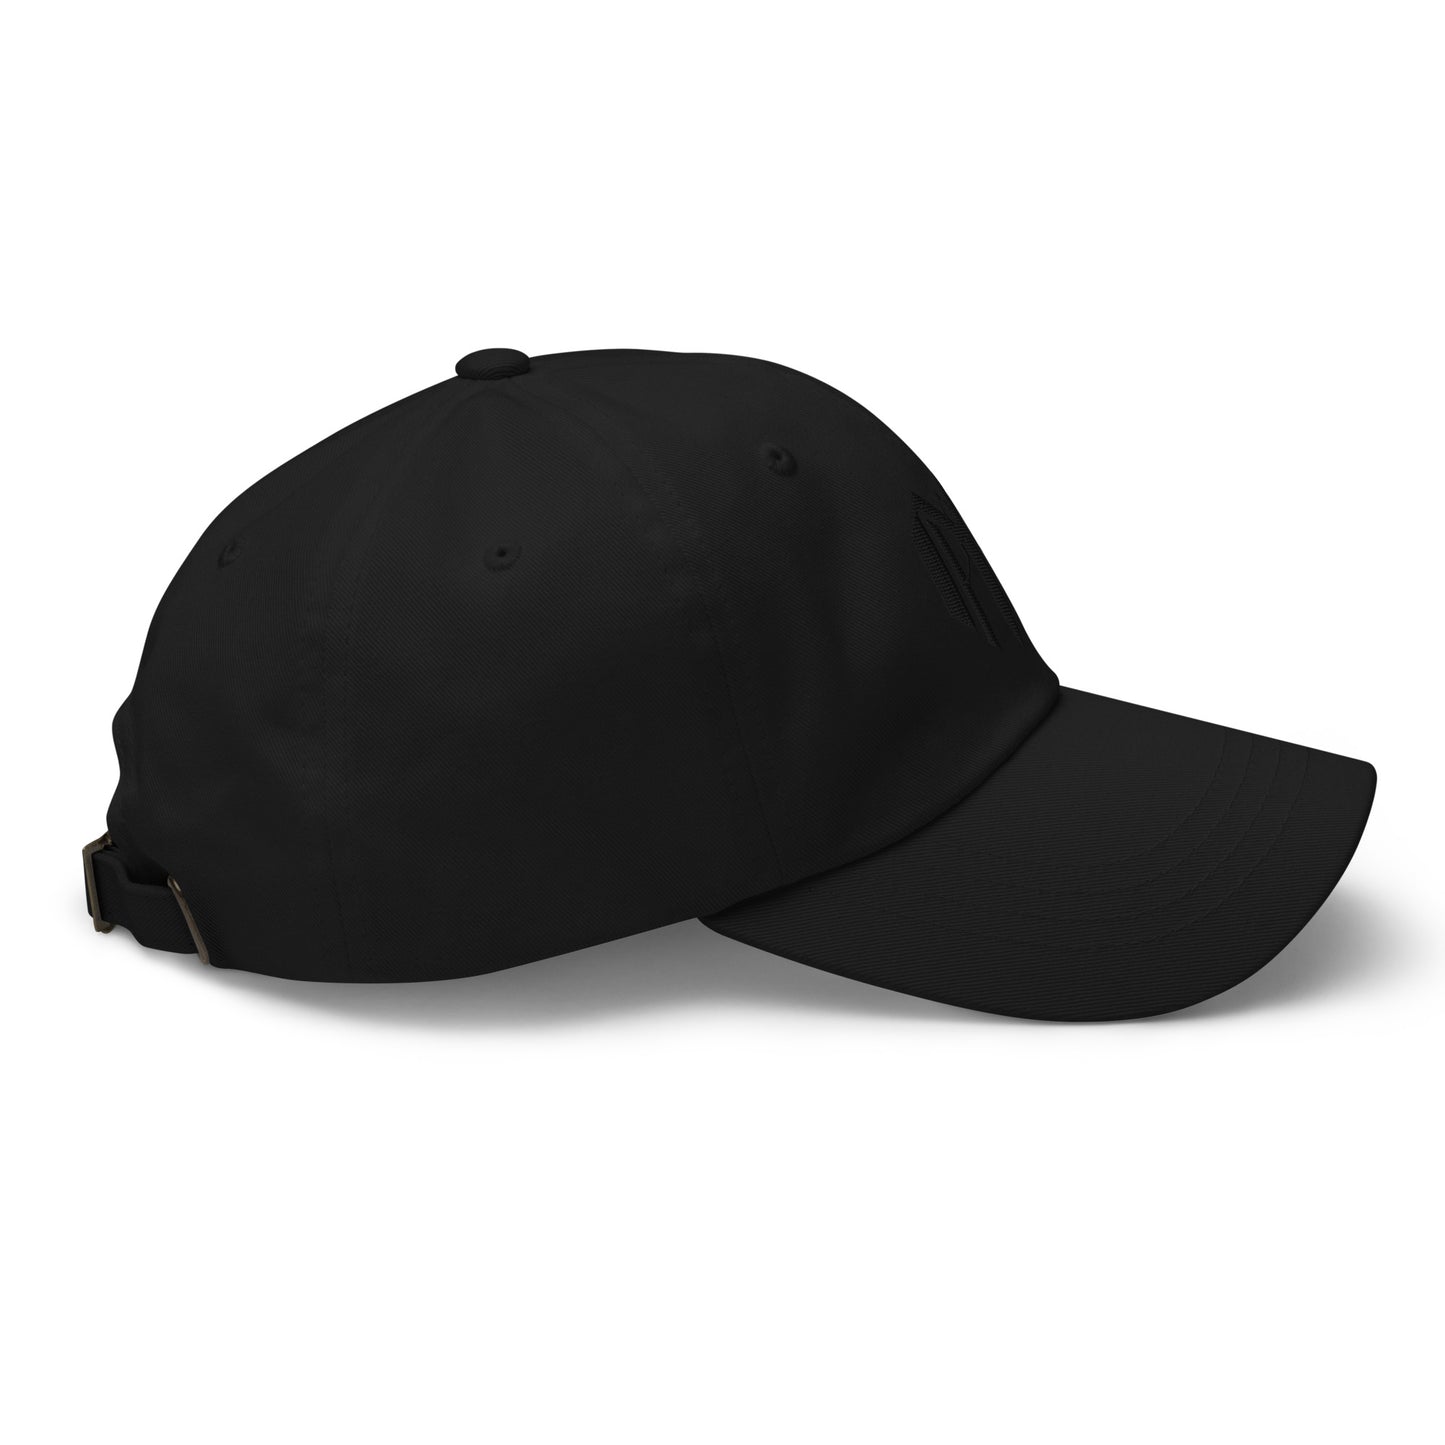 FCSR - Dad hat